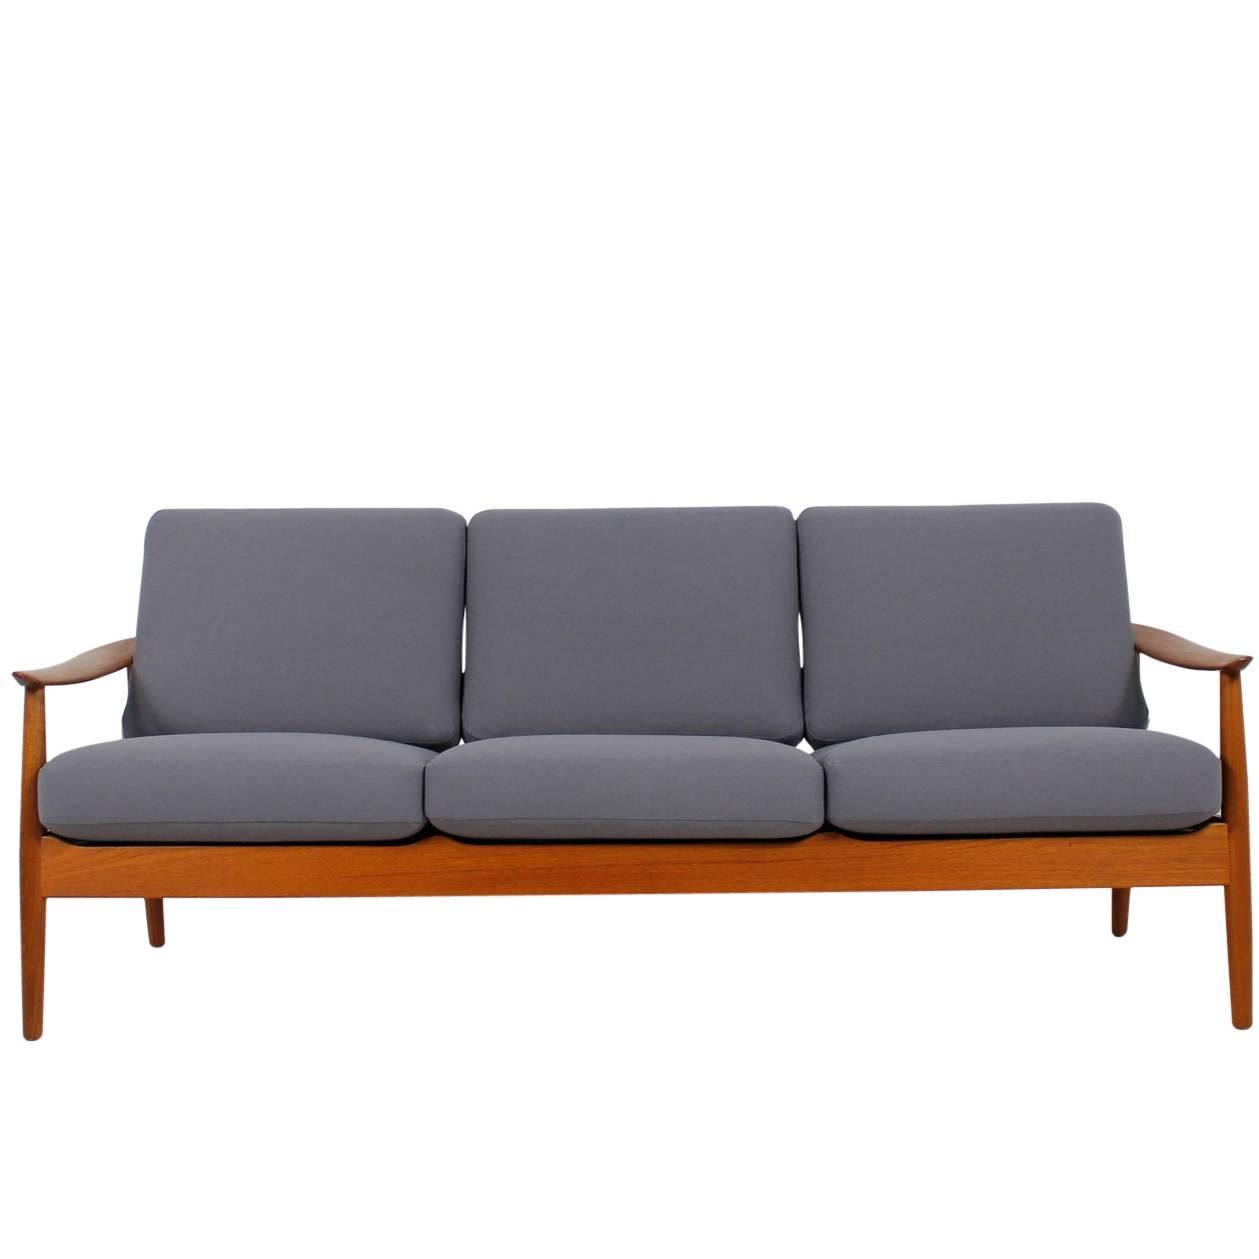 Beautiful and Rare Arne Vodder Teak Sofa Danish Modern Design, Mid-Century For Sale